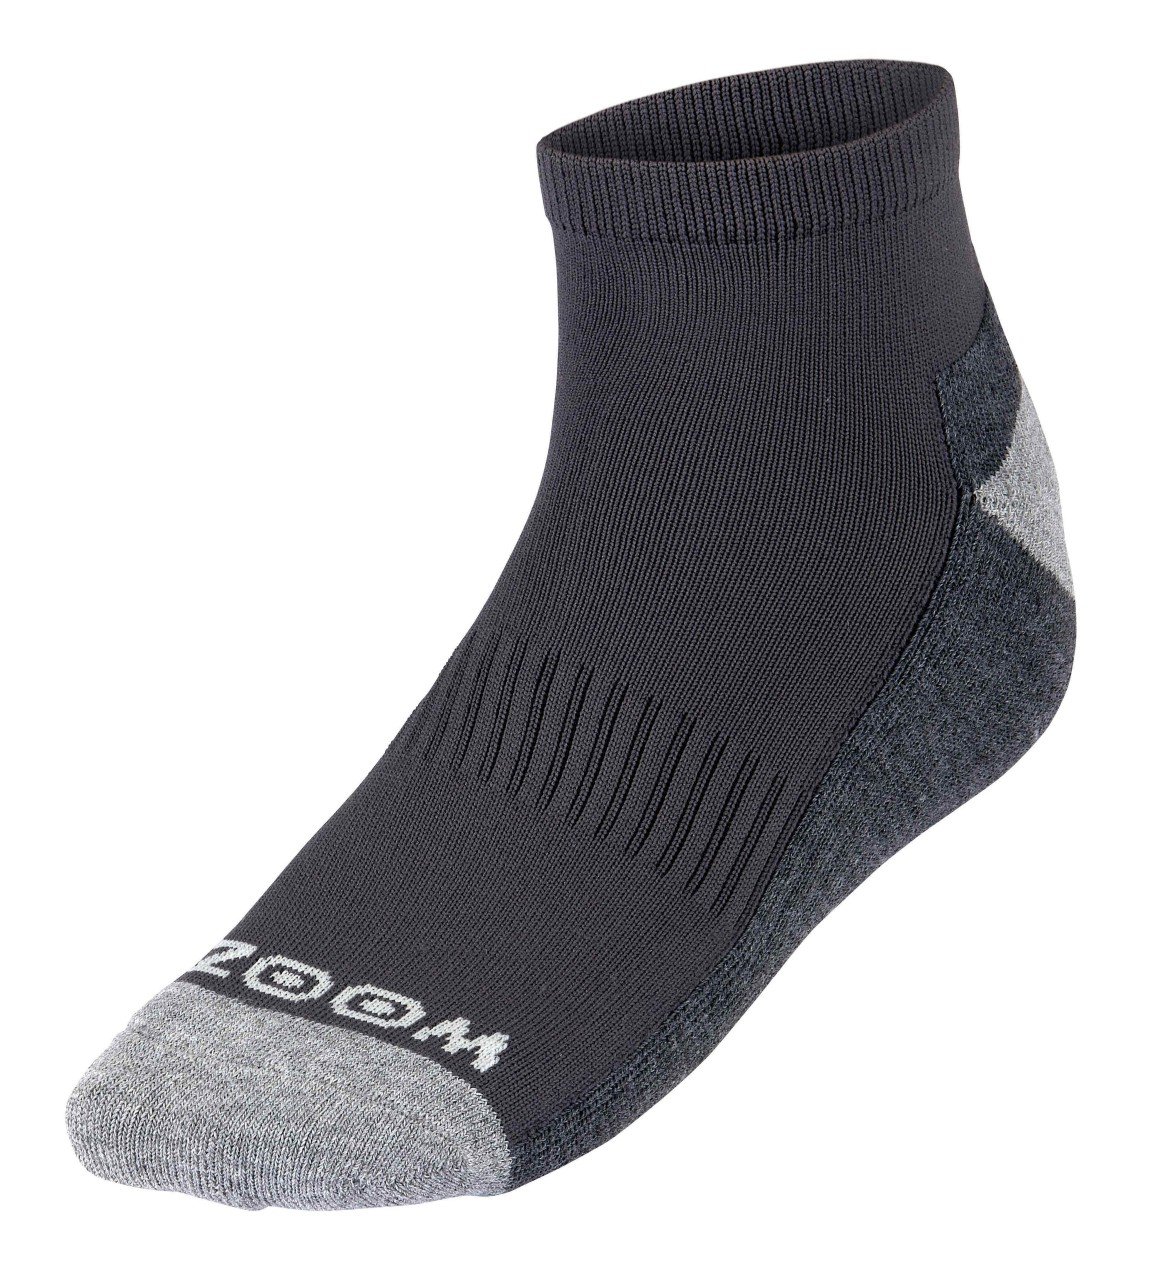 Zoom Ankle Socken kurz Herren 3er Pack von Ekomi